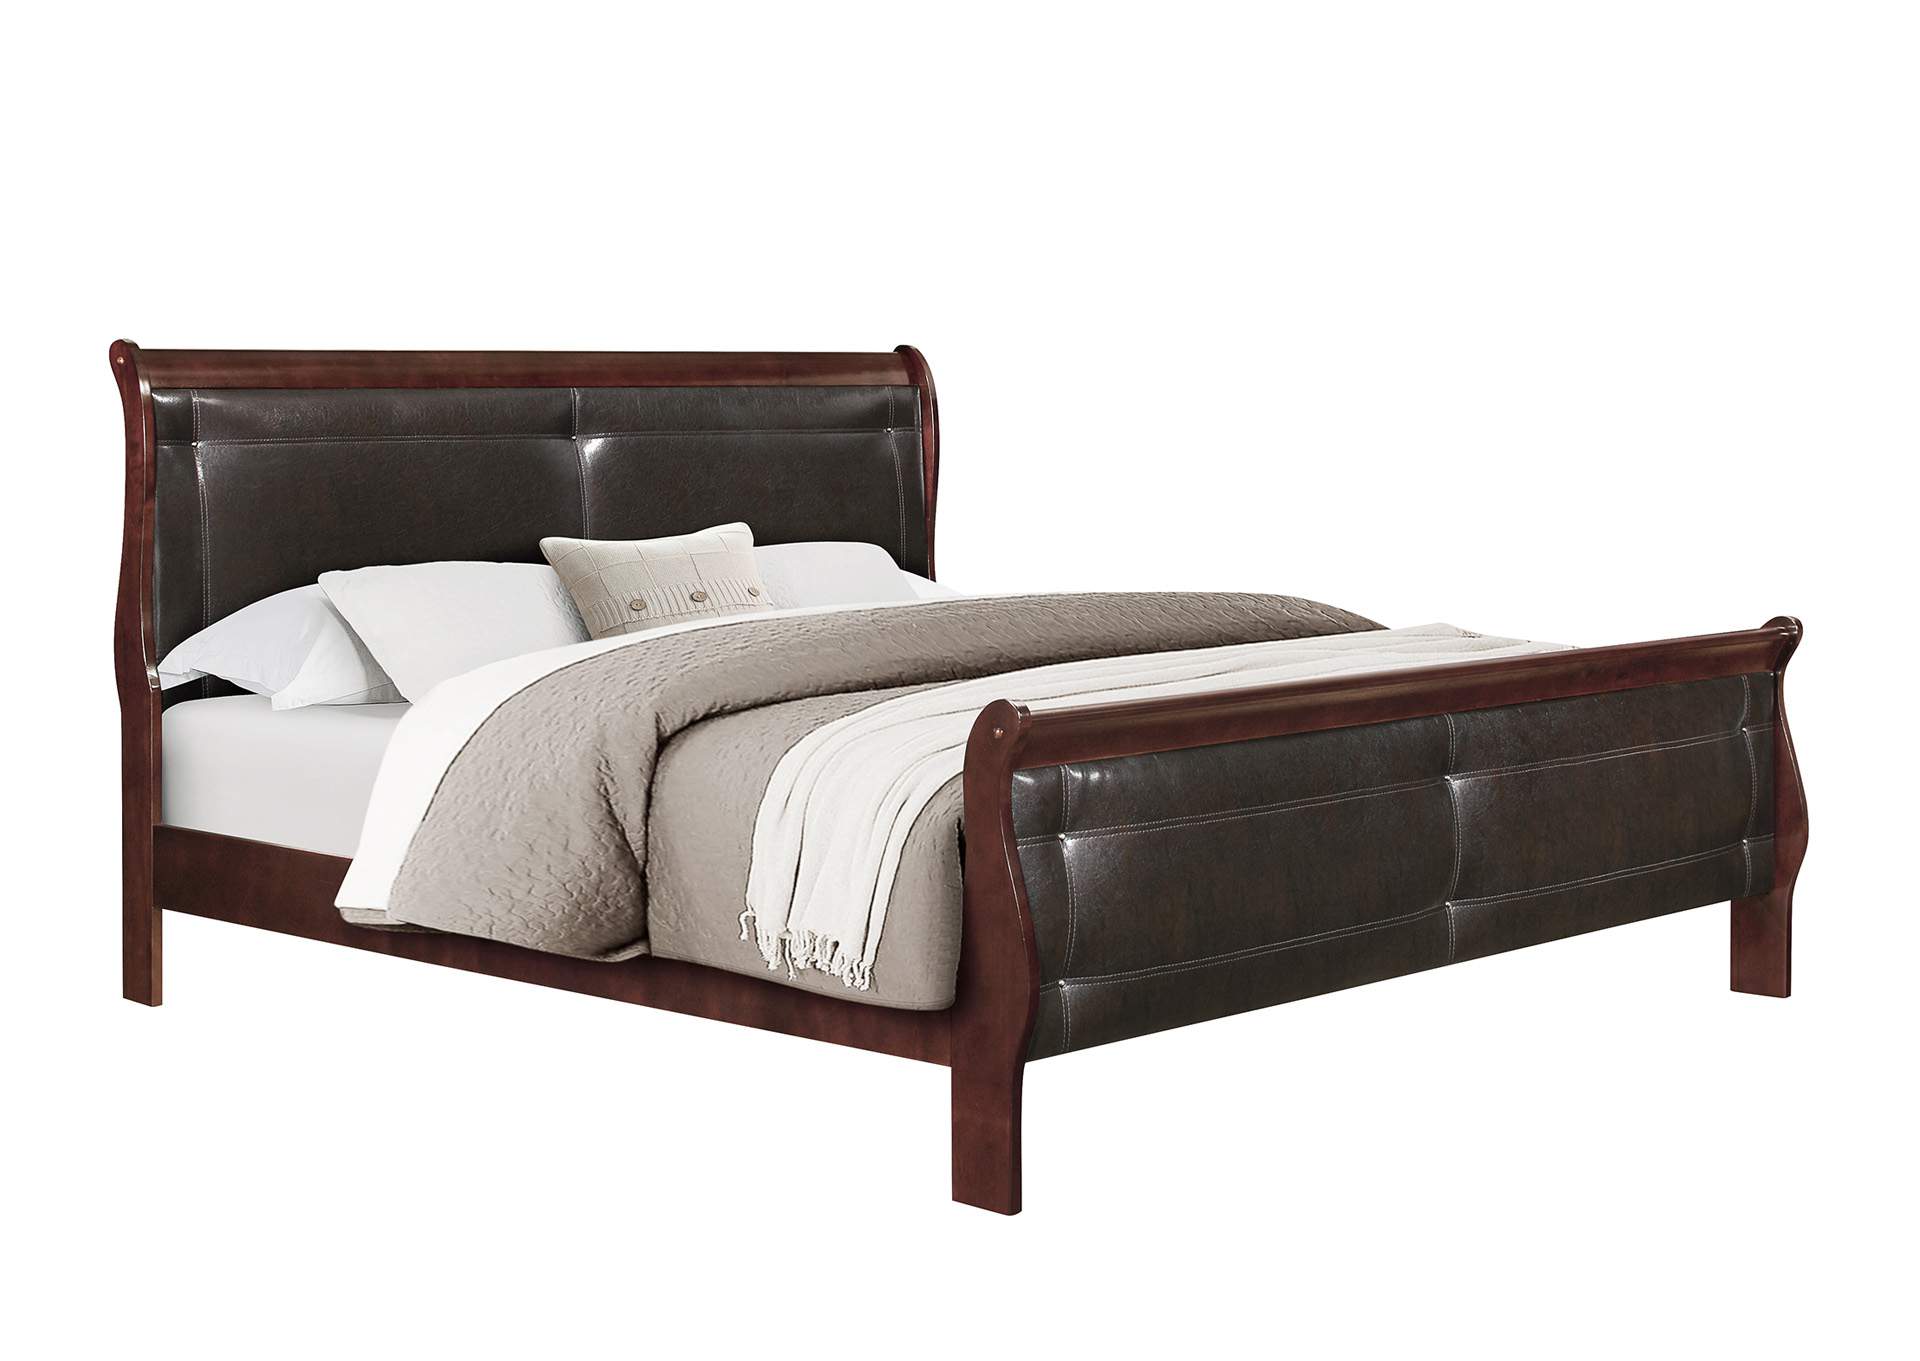 Merlot Marley King Bed,Global Furniture USA